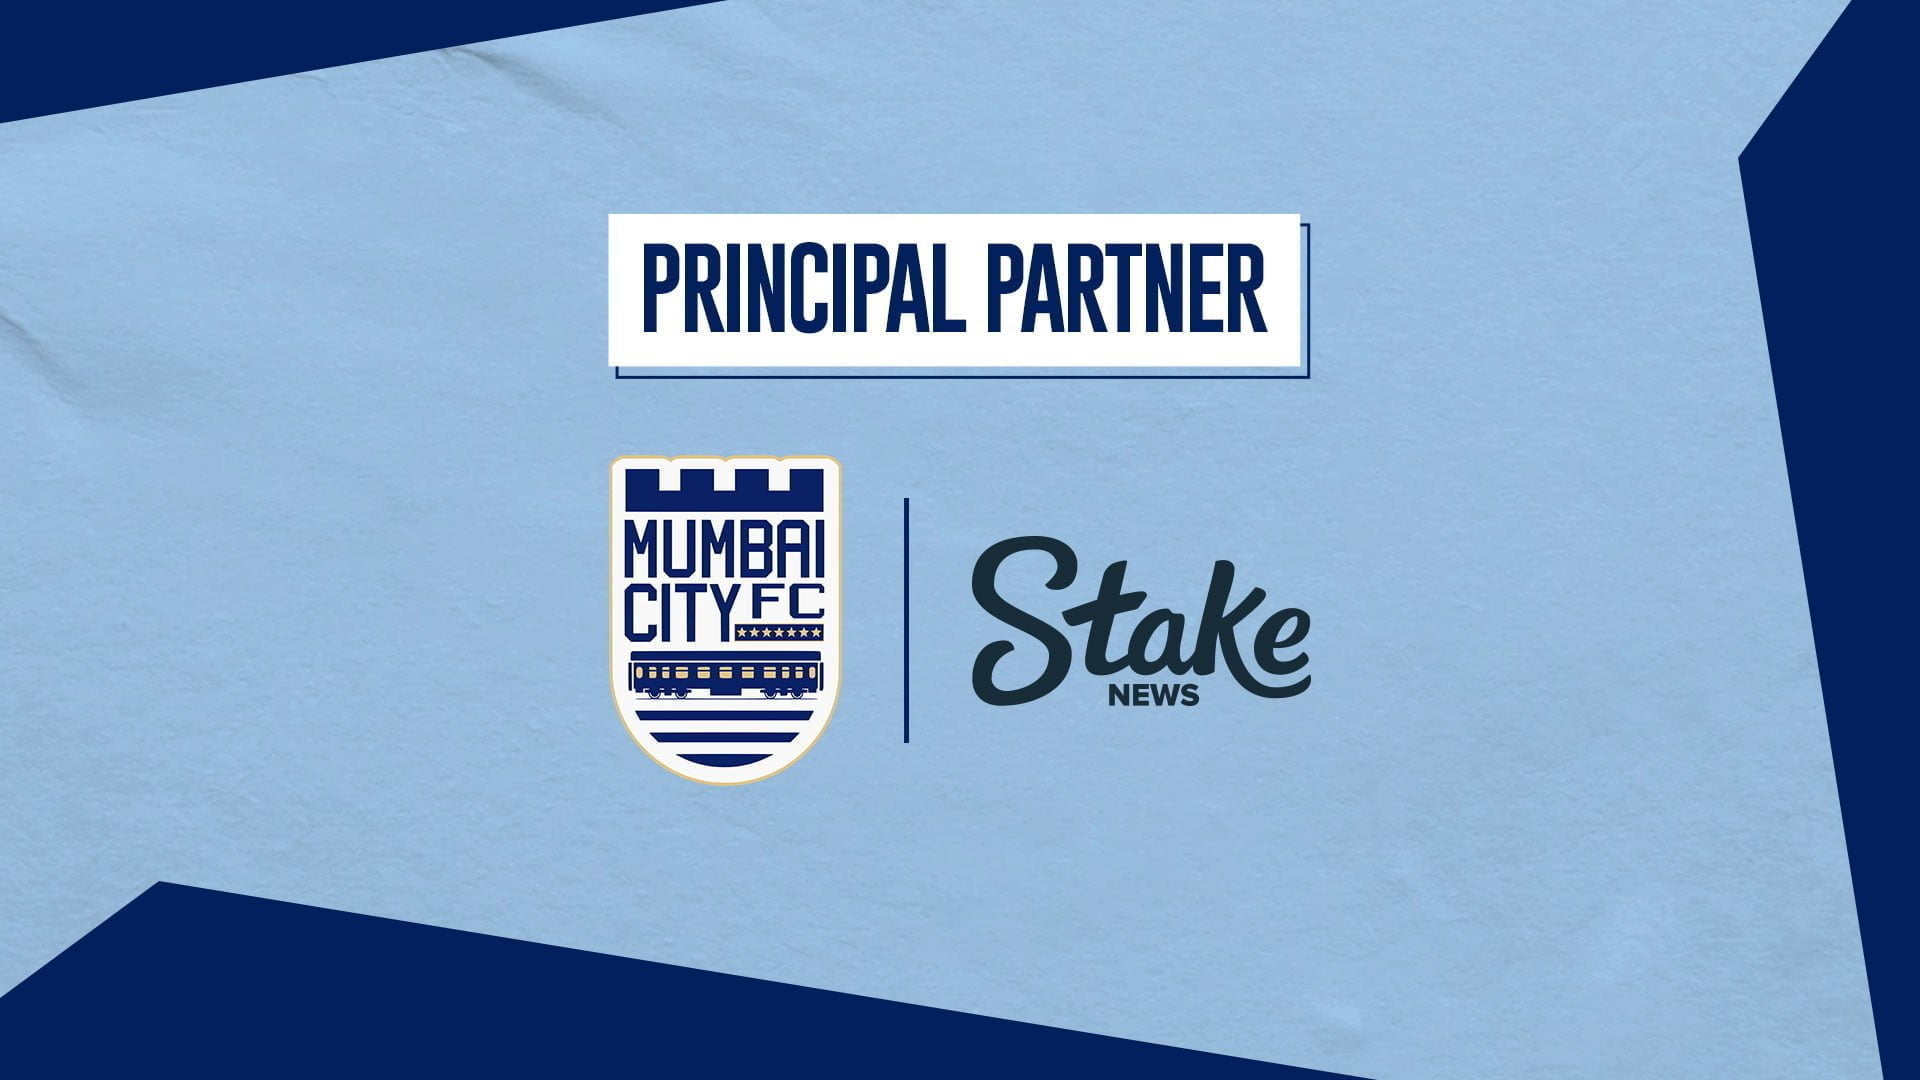 Mumbai City FC: All changes from next season - Sportstar